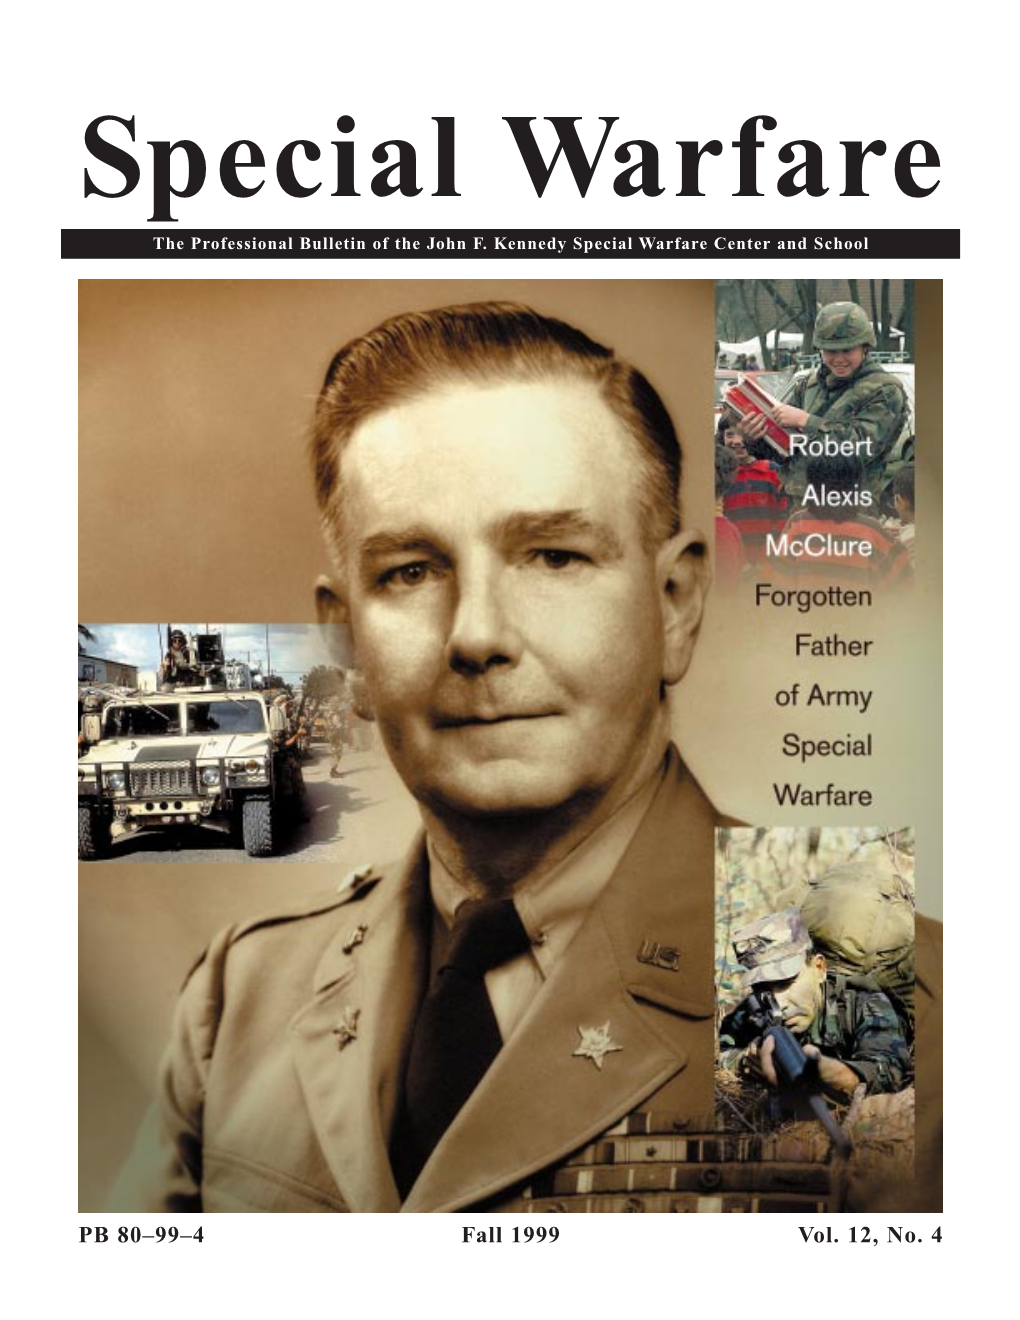 PB 80–99–4 Fall 1999 Vol. 12, No. 4 from the Commandant Special Warfare